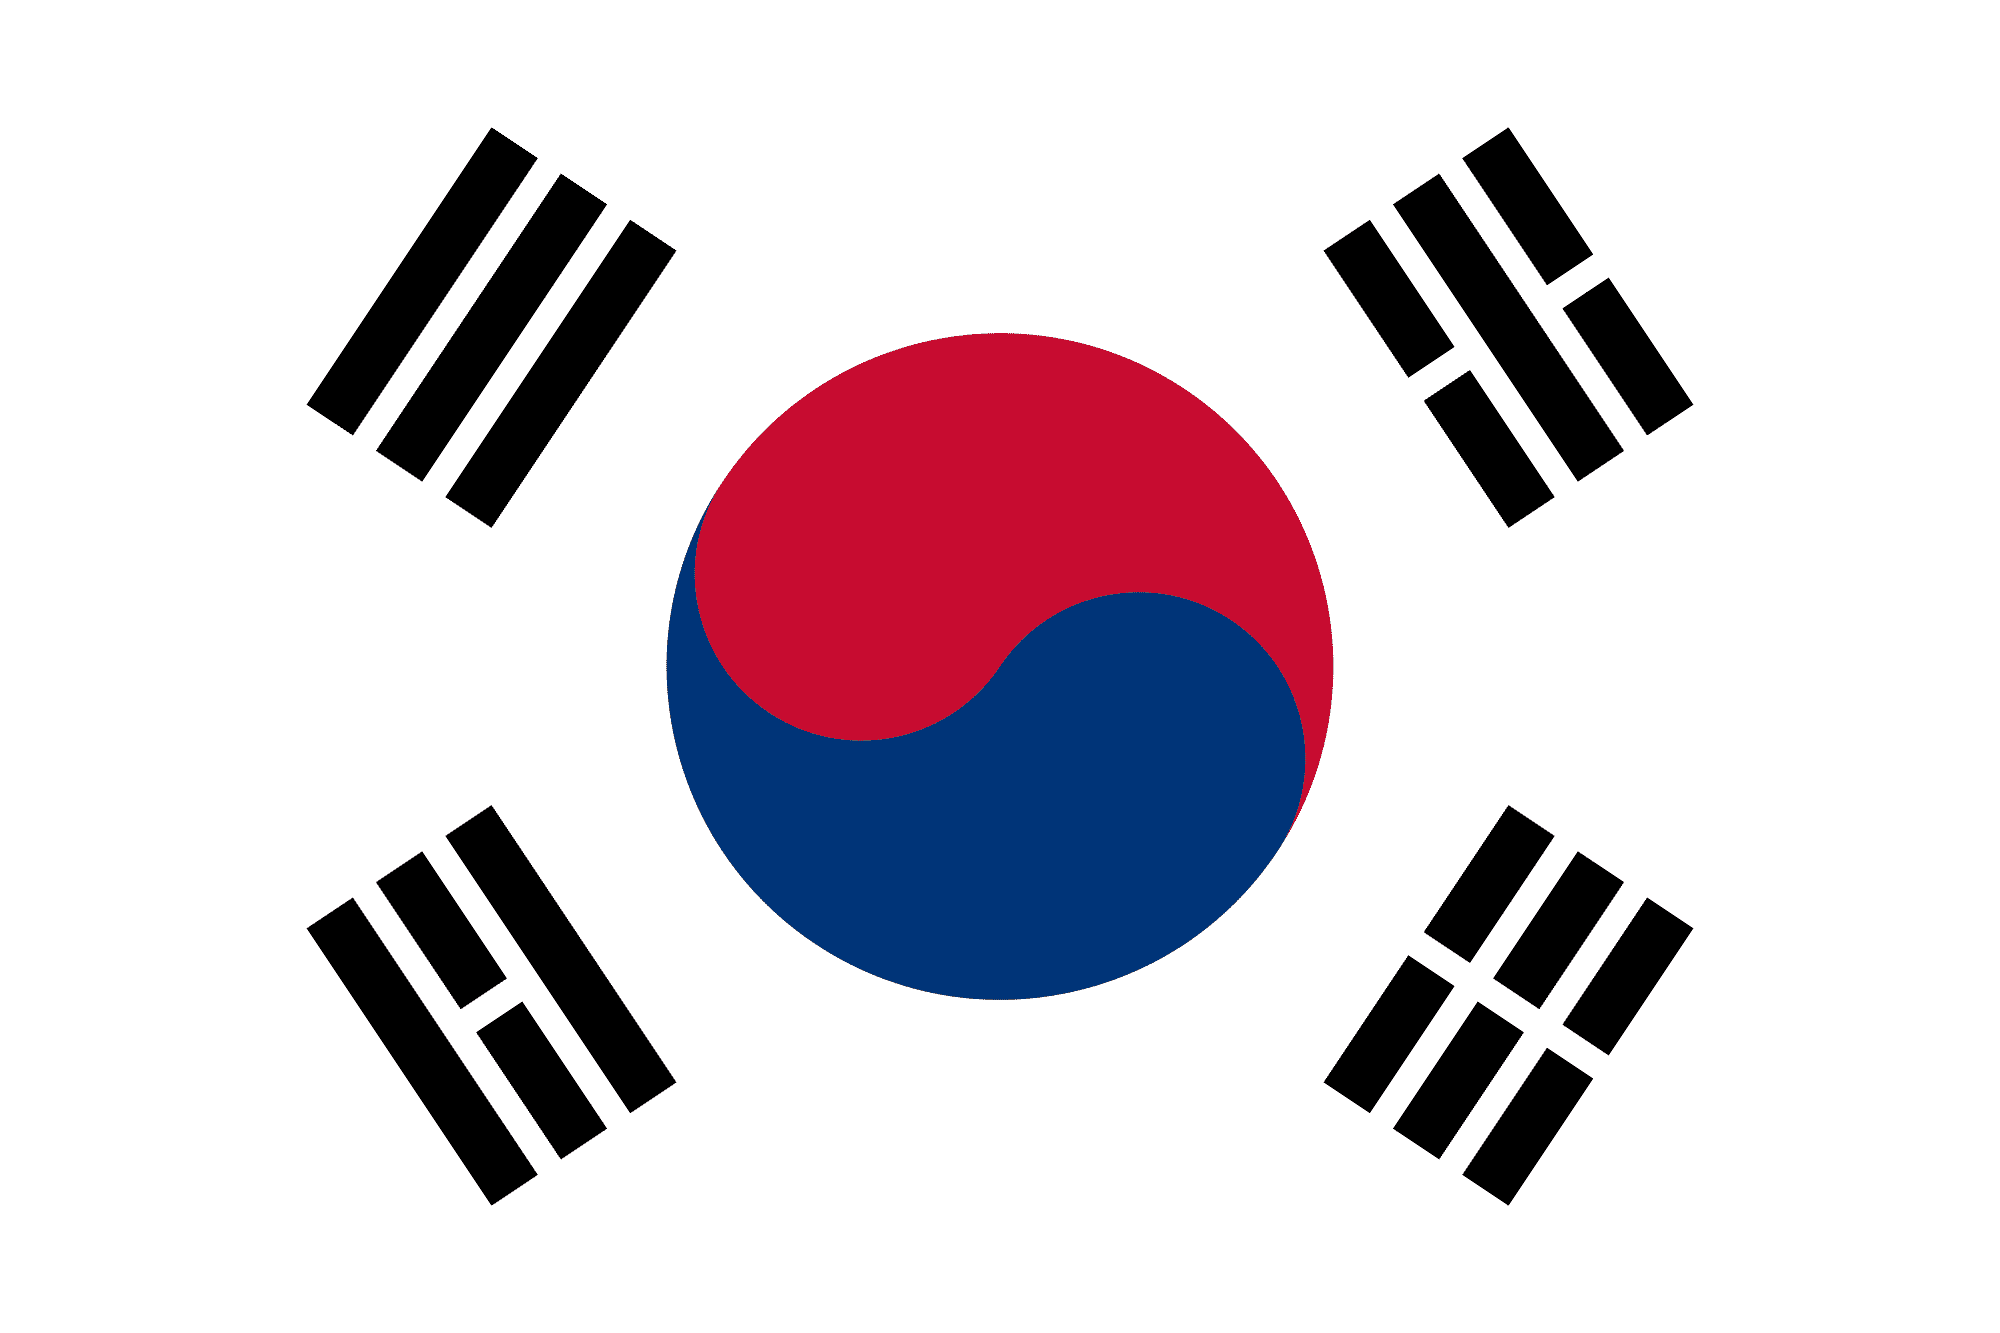 Coreia do Sul - História, características, aspectos políticos e geográficos